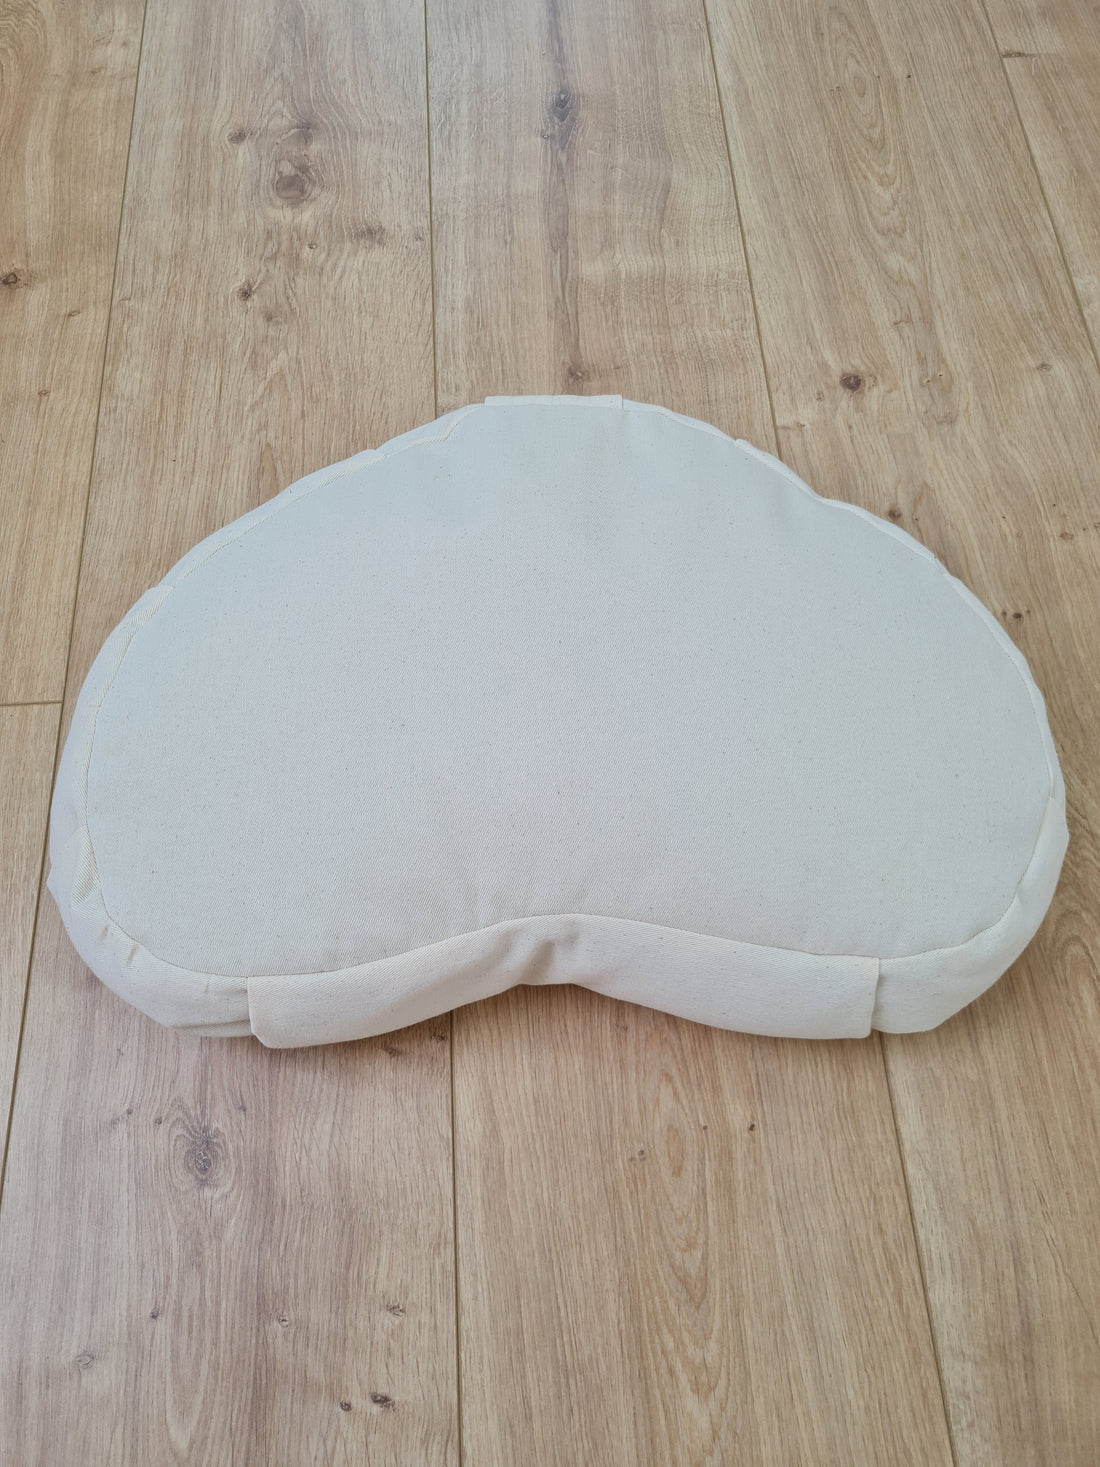 Heart-shaped floor cushion filled Buckwheat hulls in natural undyed cotton fabric/Organic cushion/Meditation pillow for Yoga studio